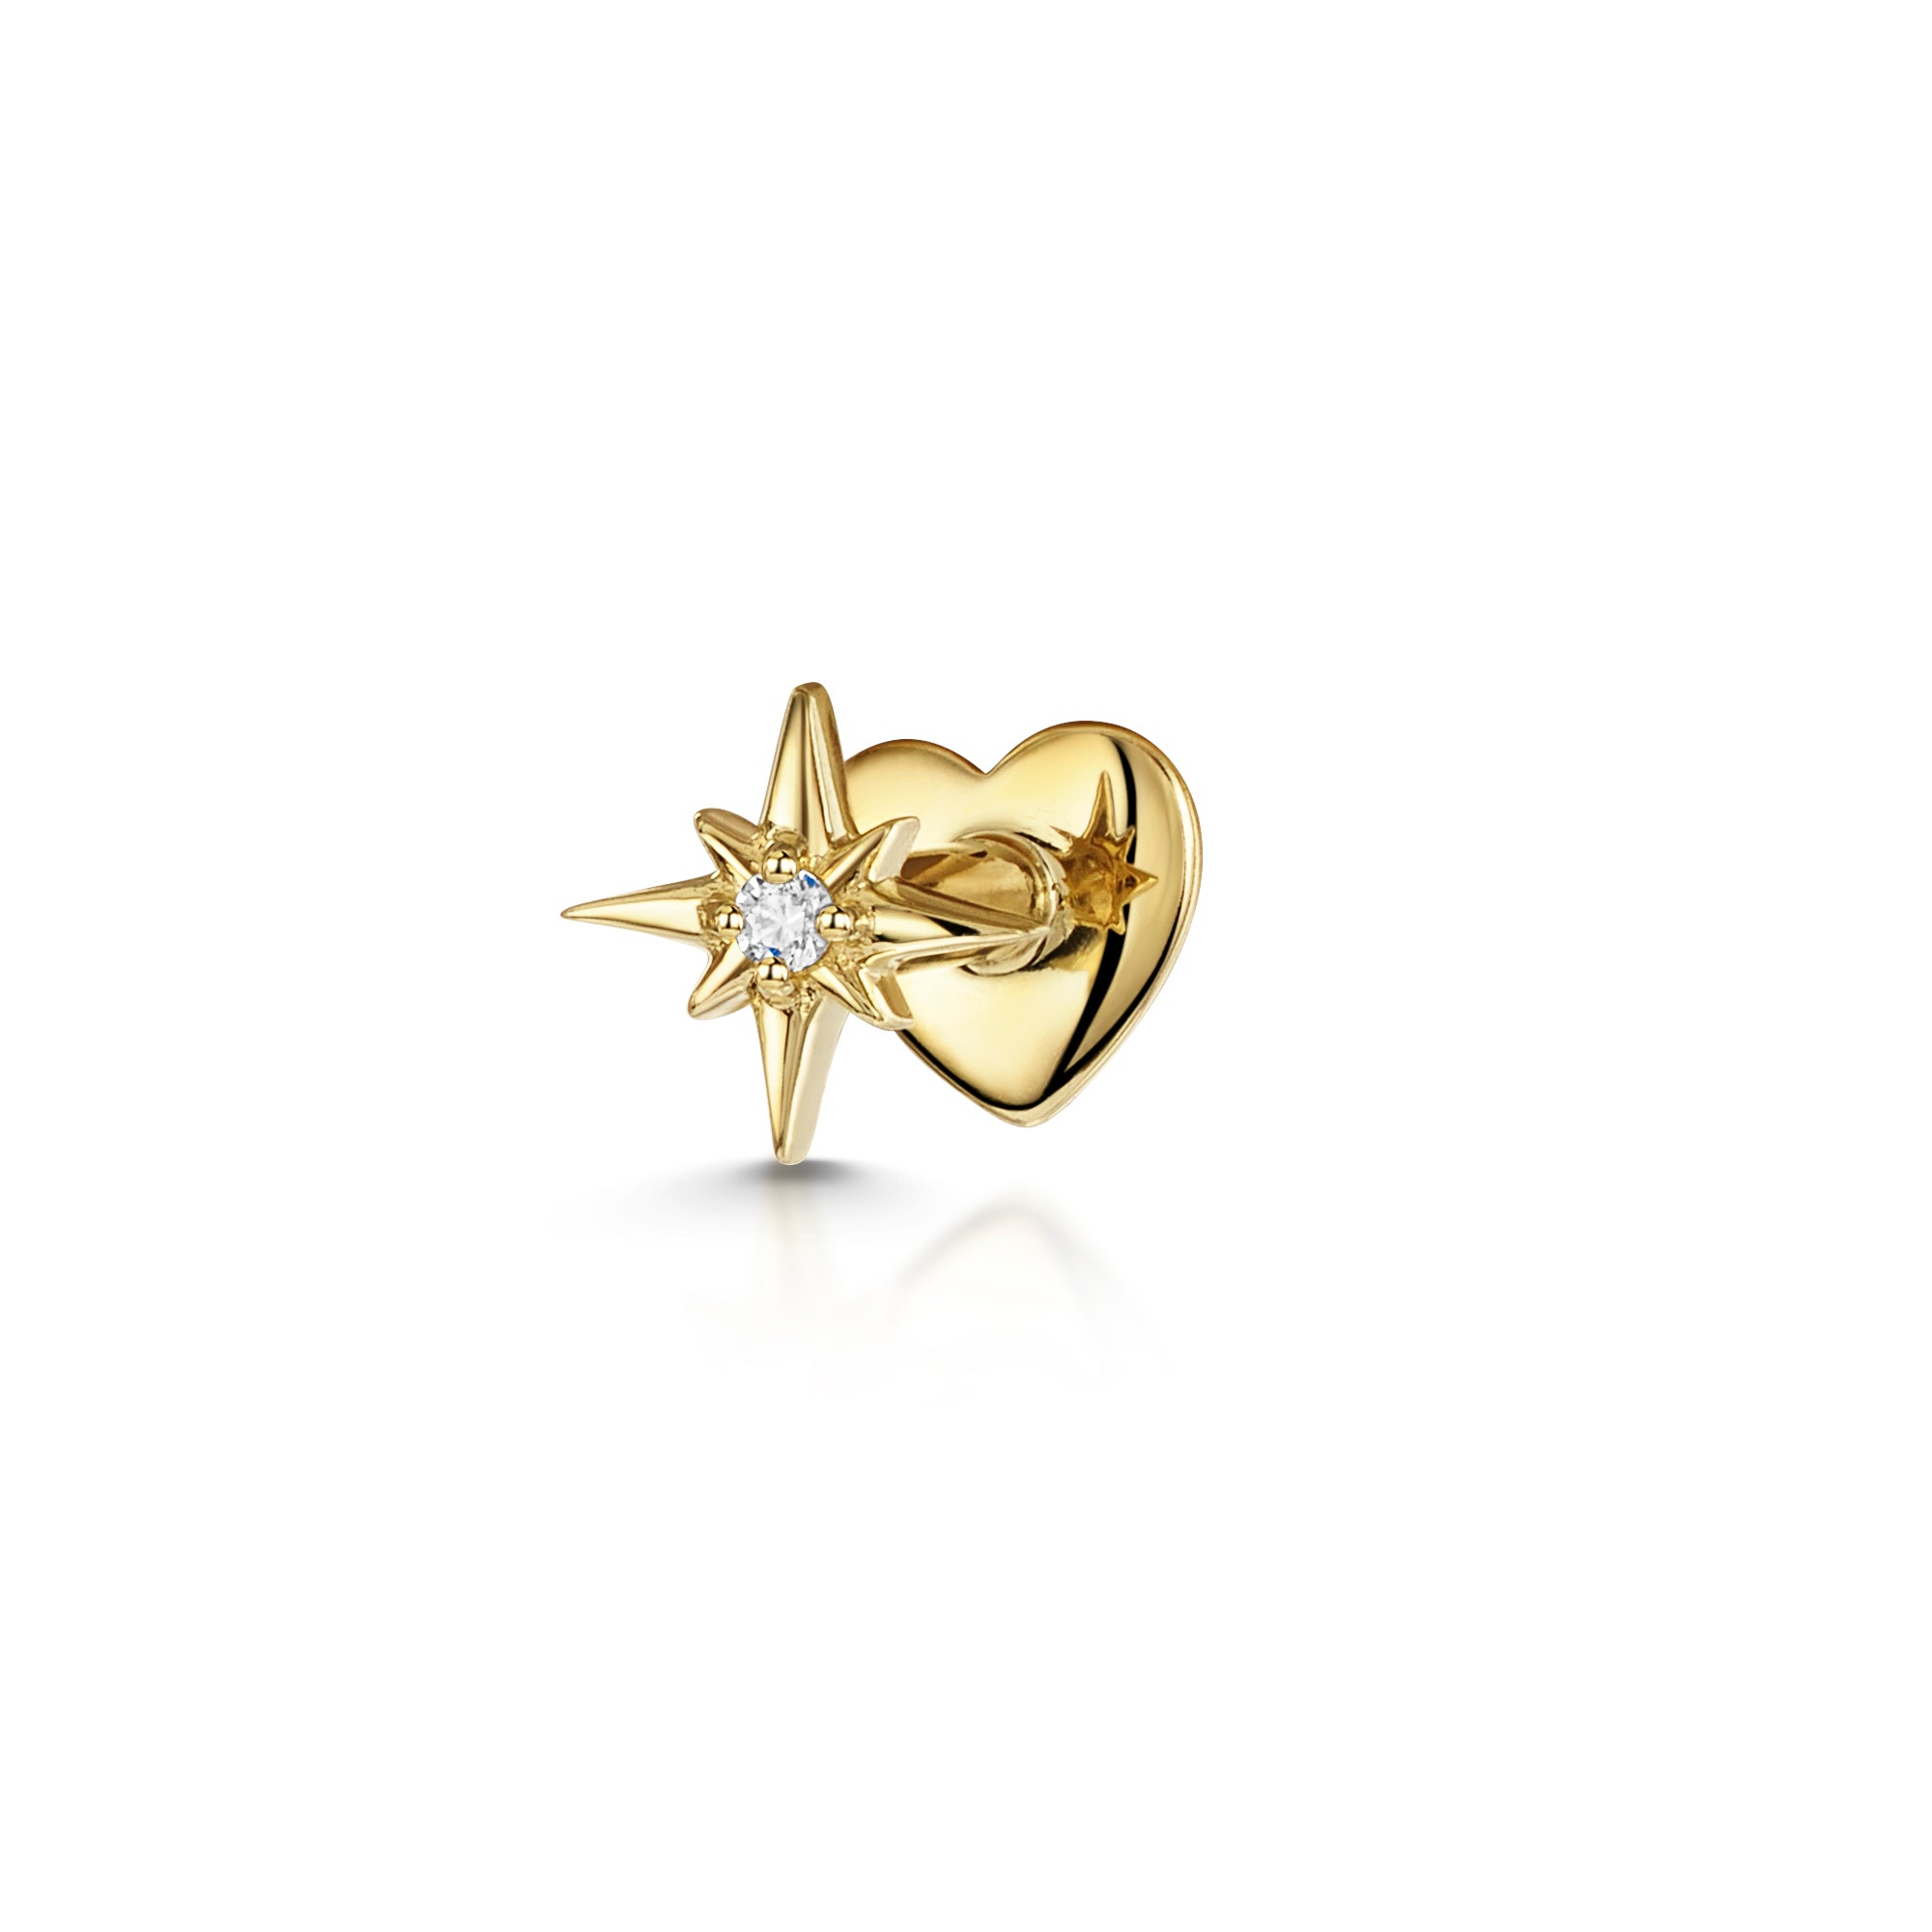 North Star Diamond Studs  Gold Earrings  Chupi